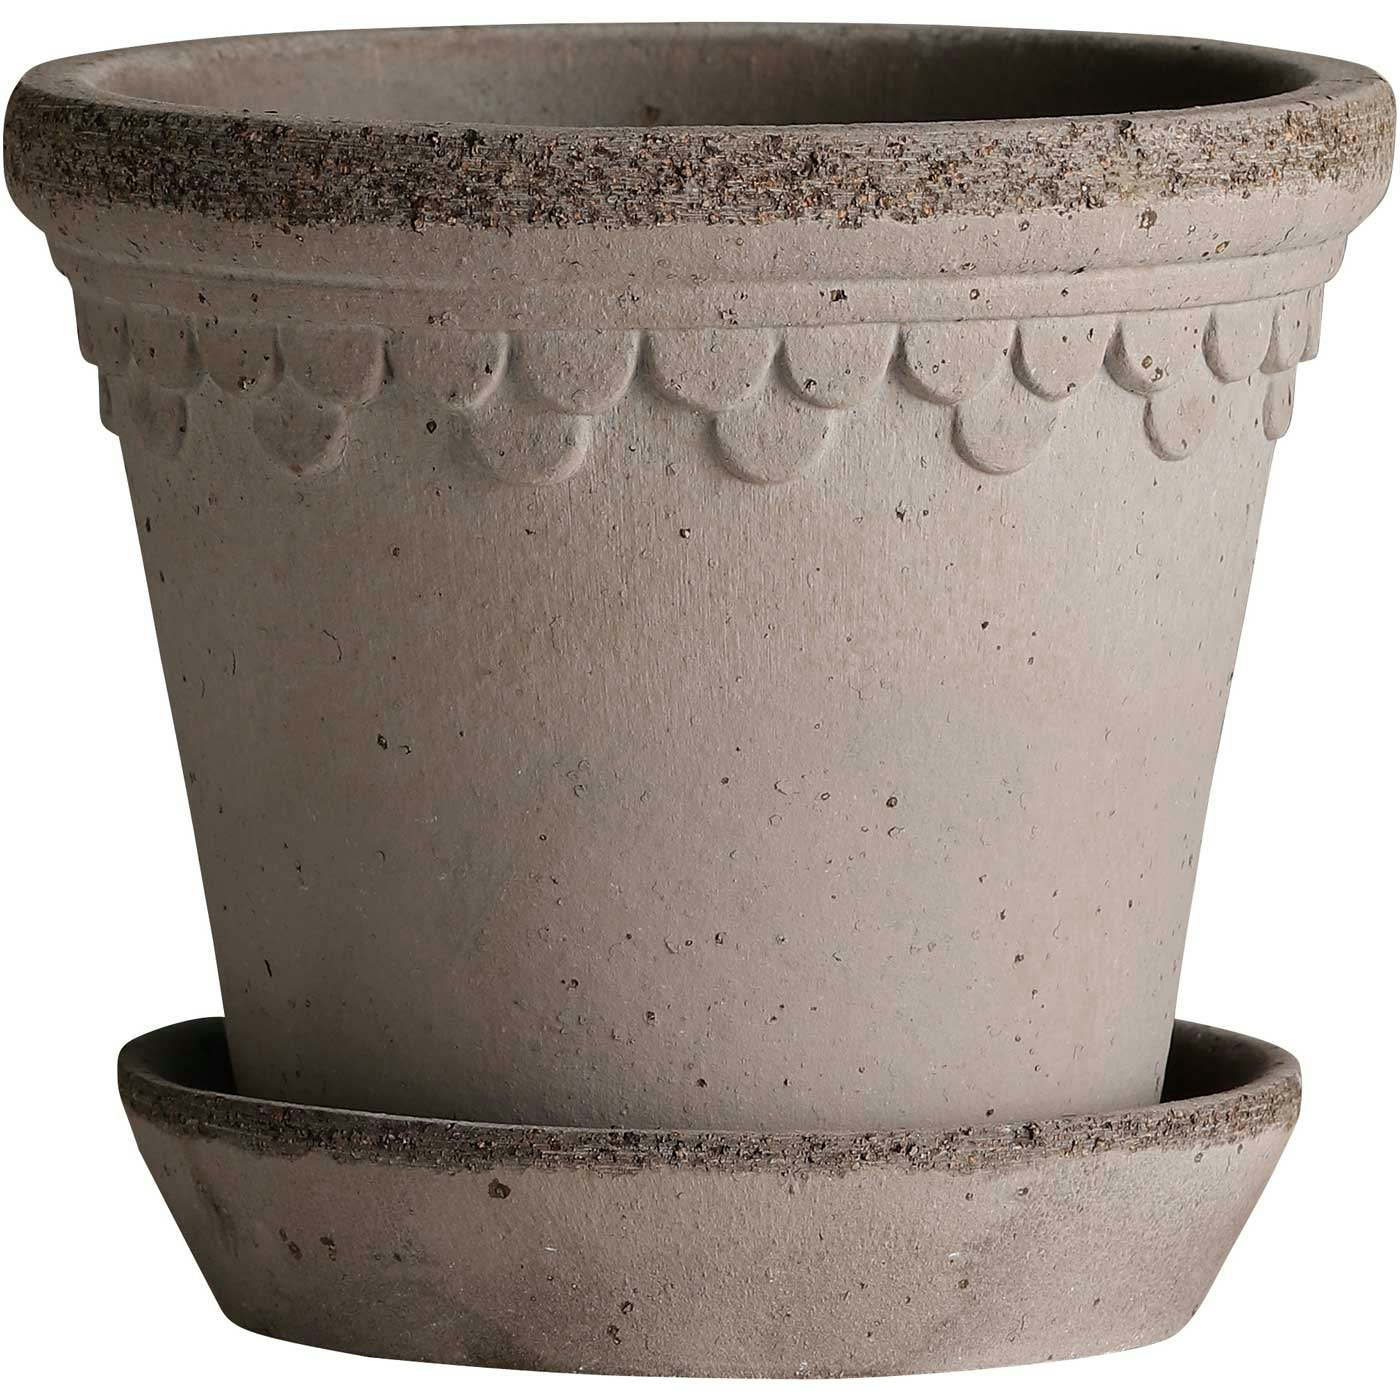 https://royaldesign.com/image/2/bergs-potter-copenhagen-pot-grey-0